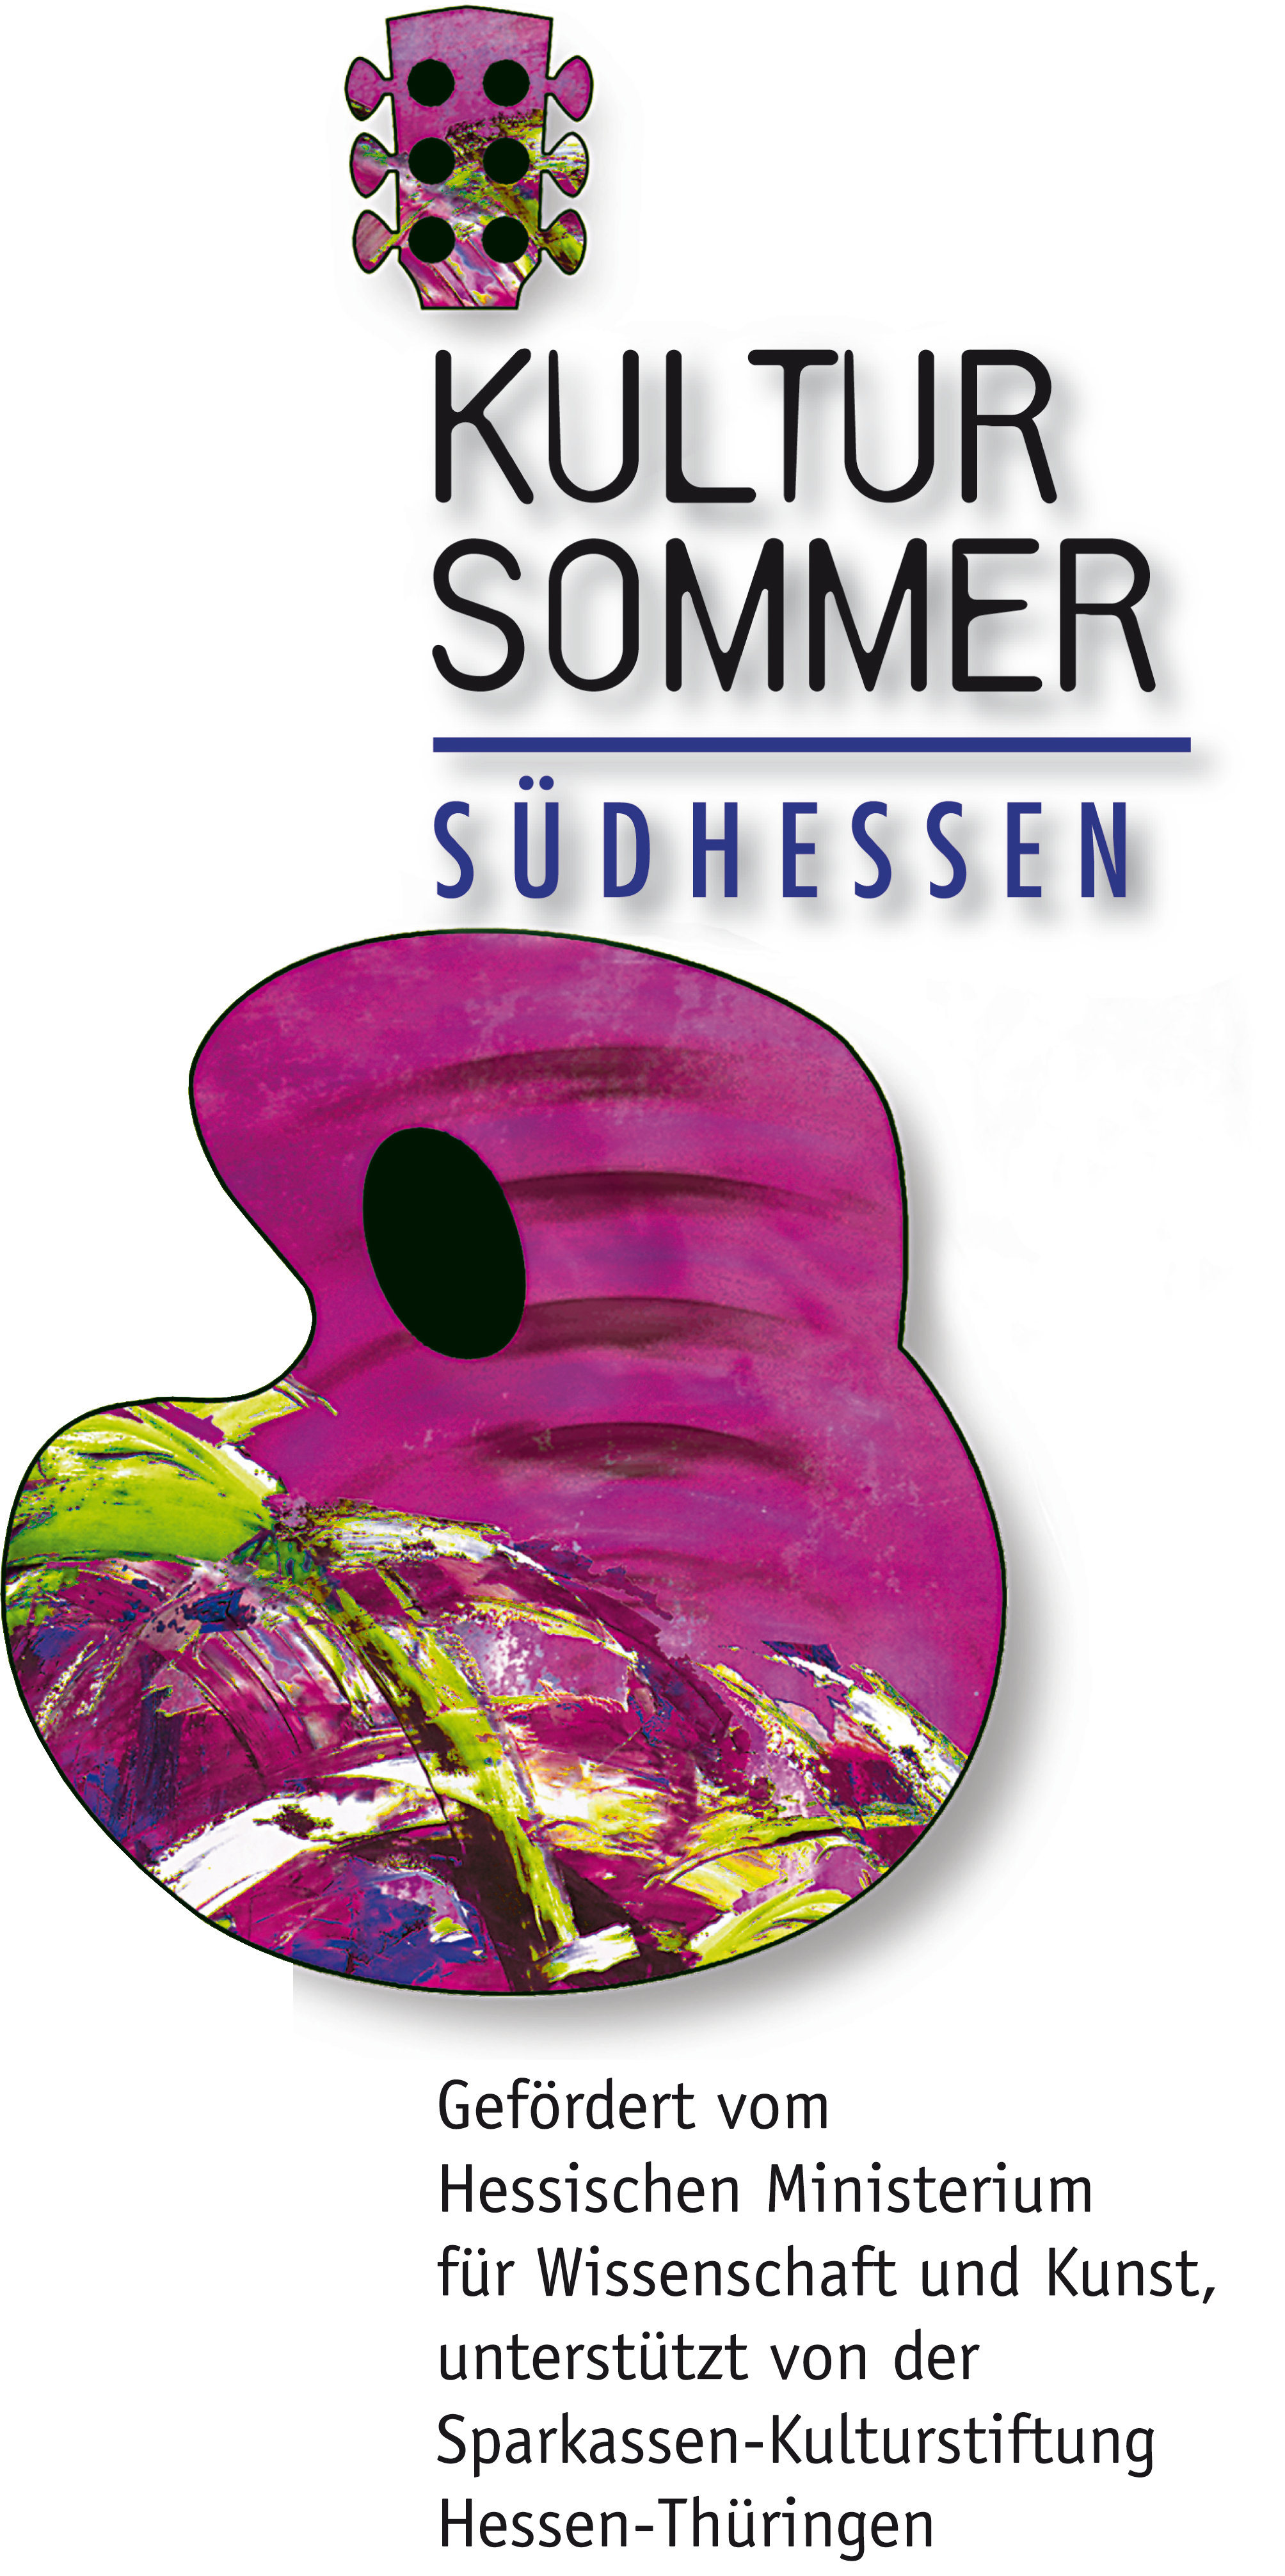 https://www.kultursommer-suedhessen.de/assets/Uploads/Kuss-Logo-Zusatz-4C-frei.png